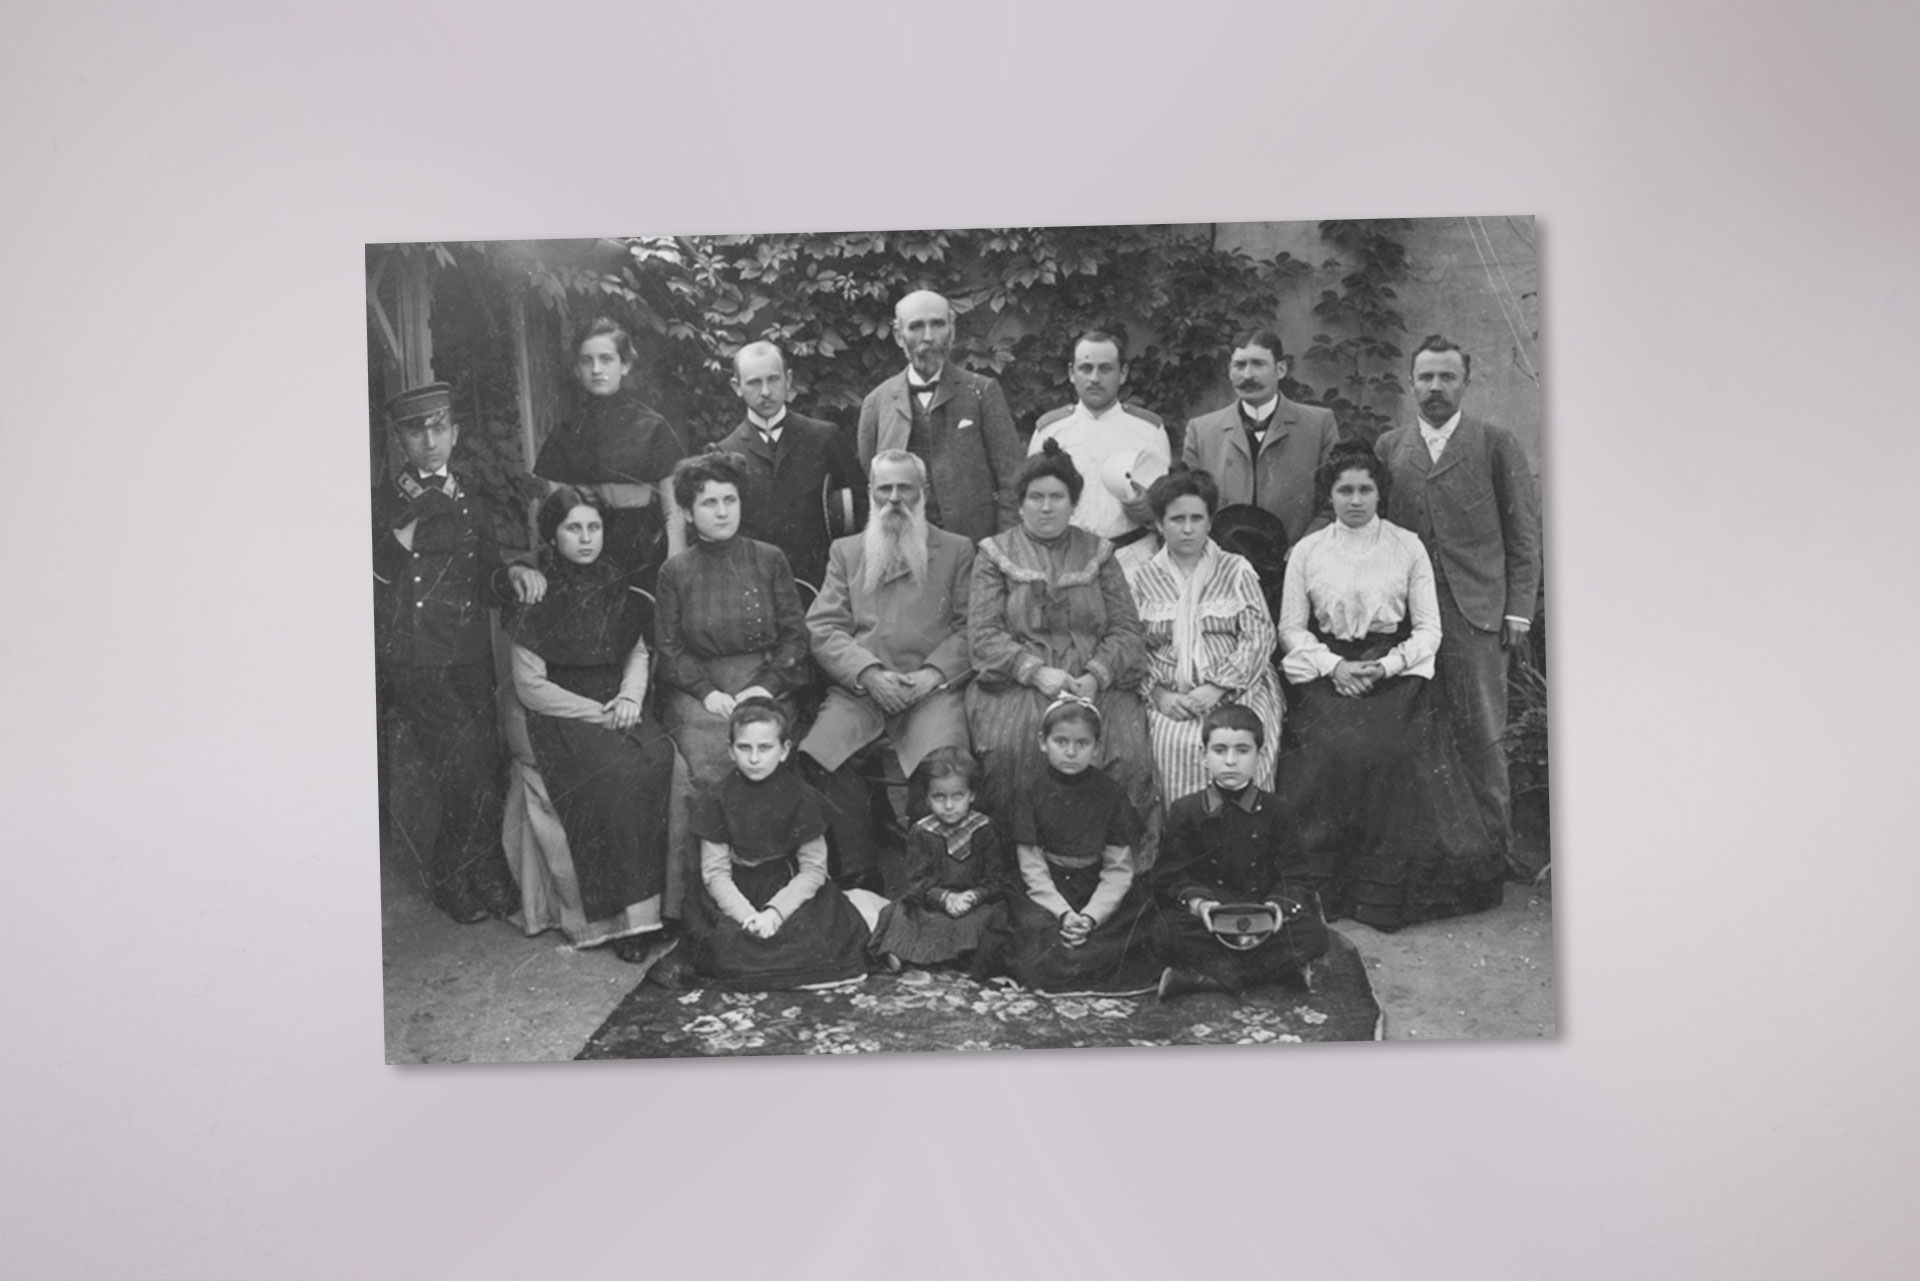 Michael Davitt with a Jewish family in Kishinev (1903)